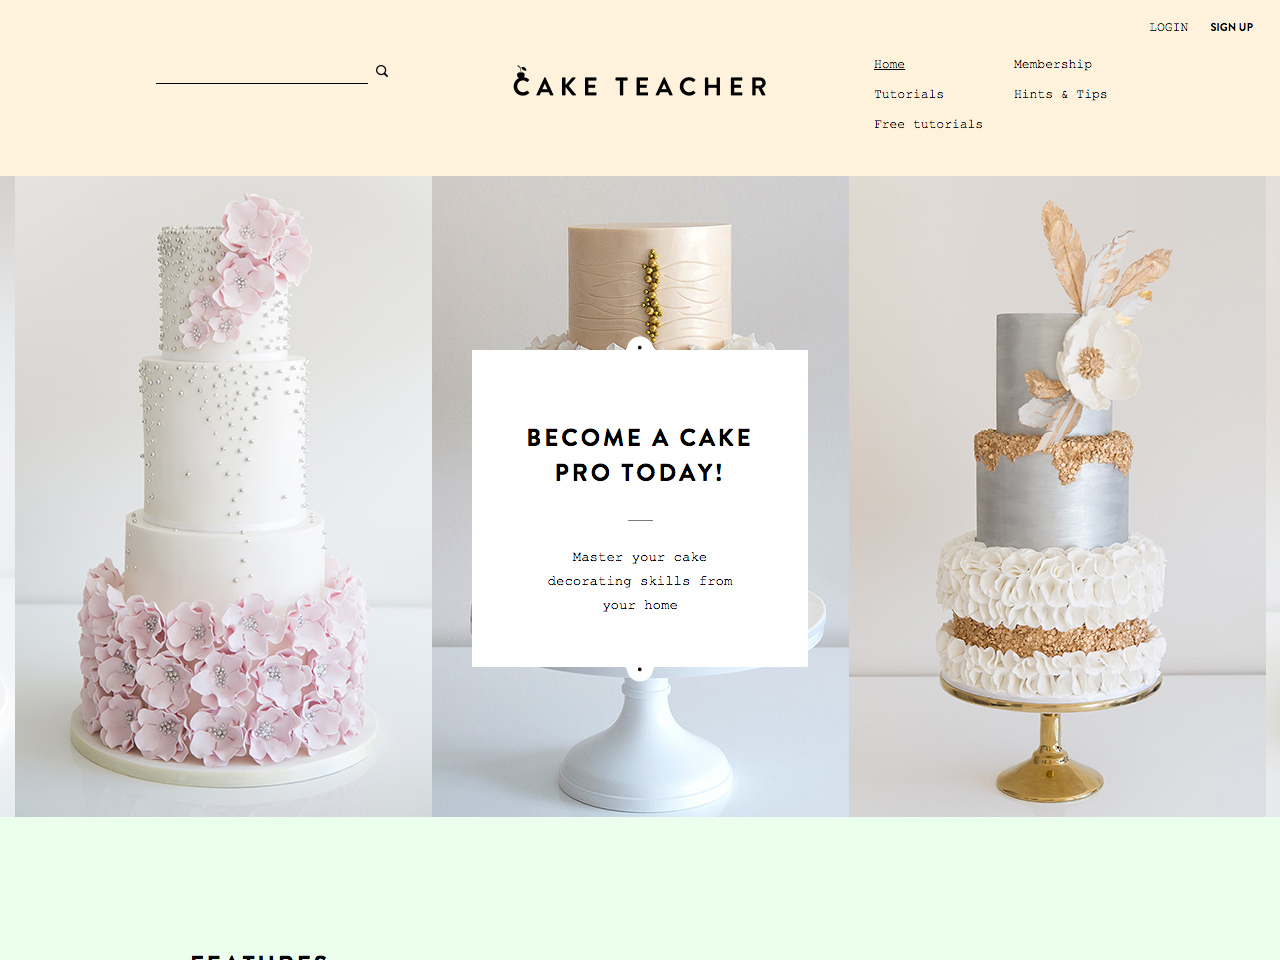 Cake Teacher – Cake Decorating Classes Online